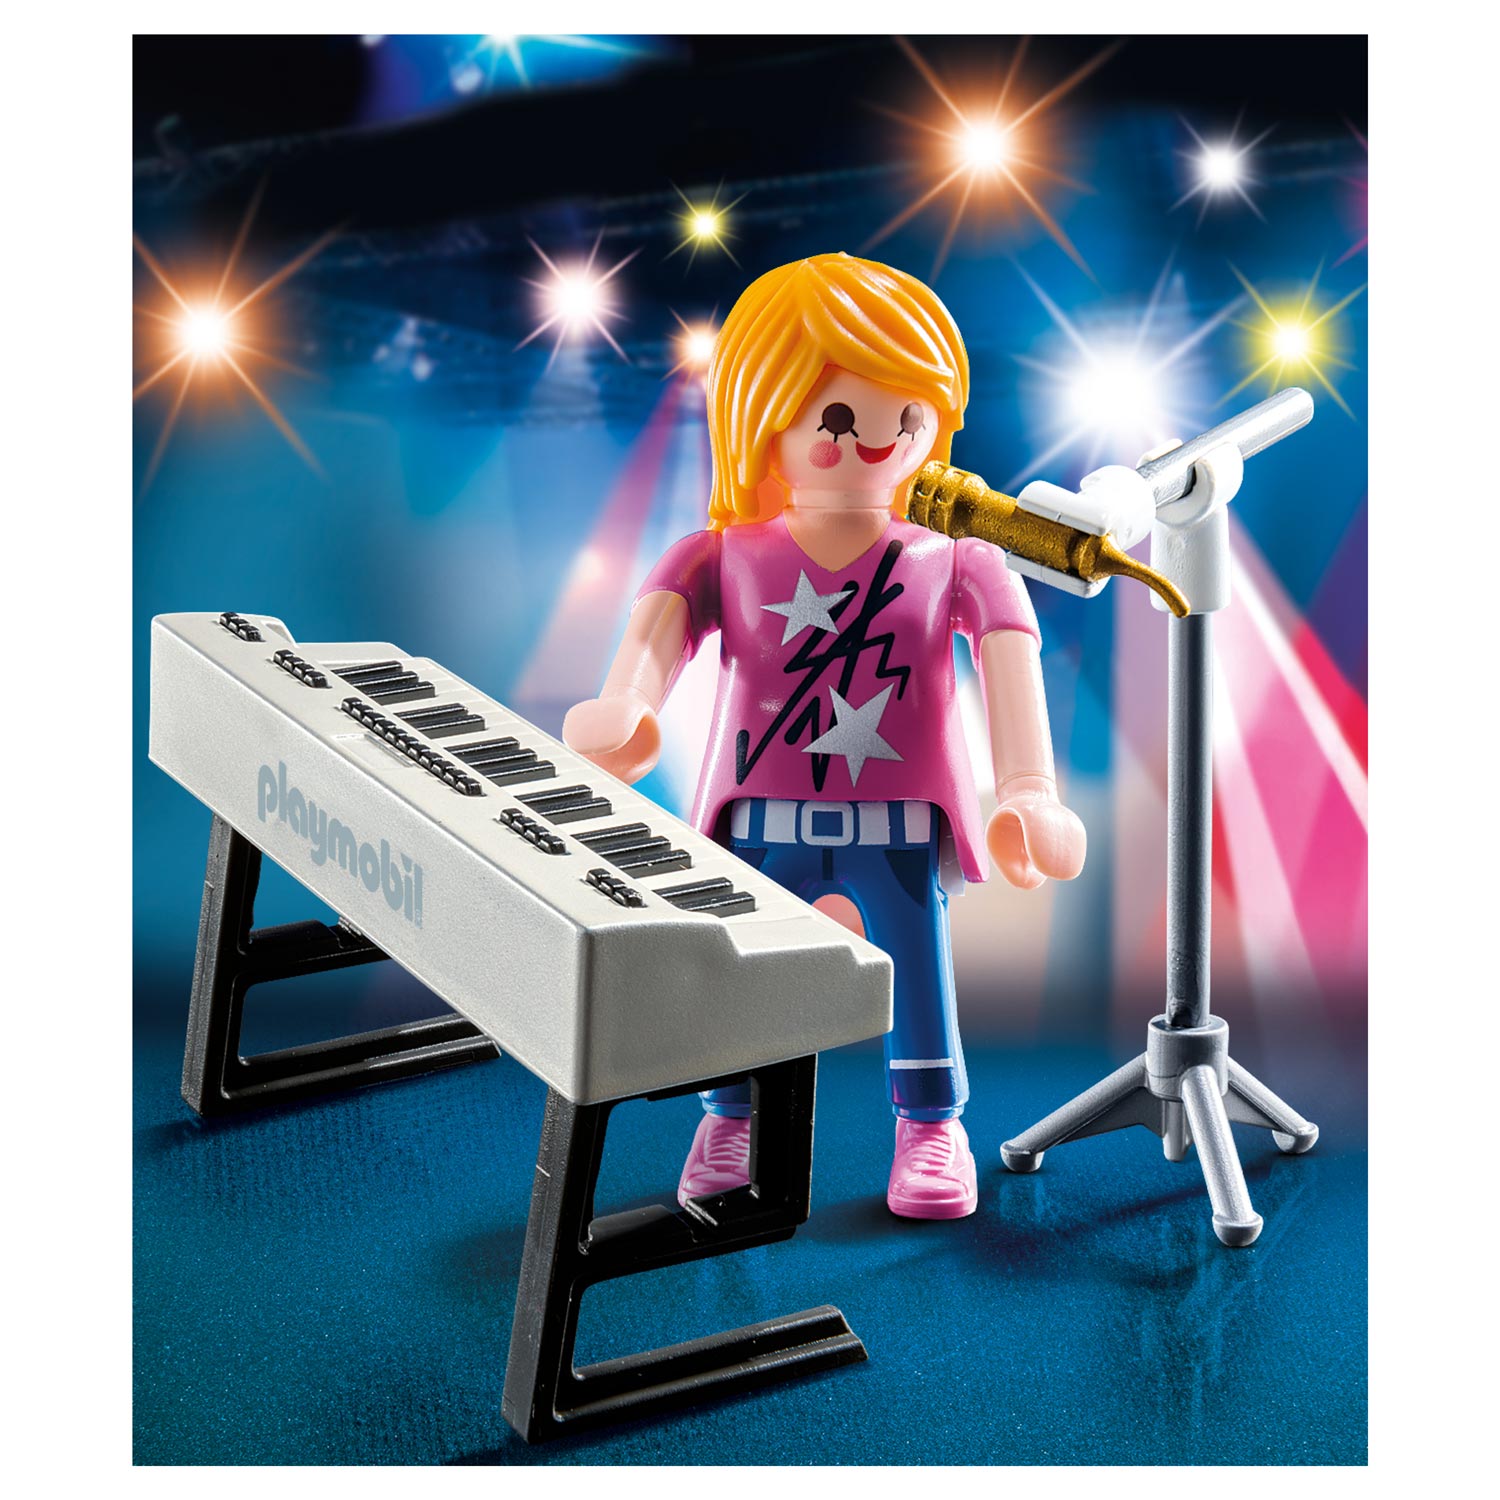 Playmobil 9095 Zangeres met Keyboard